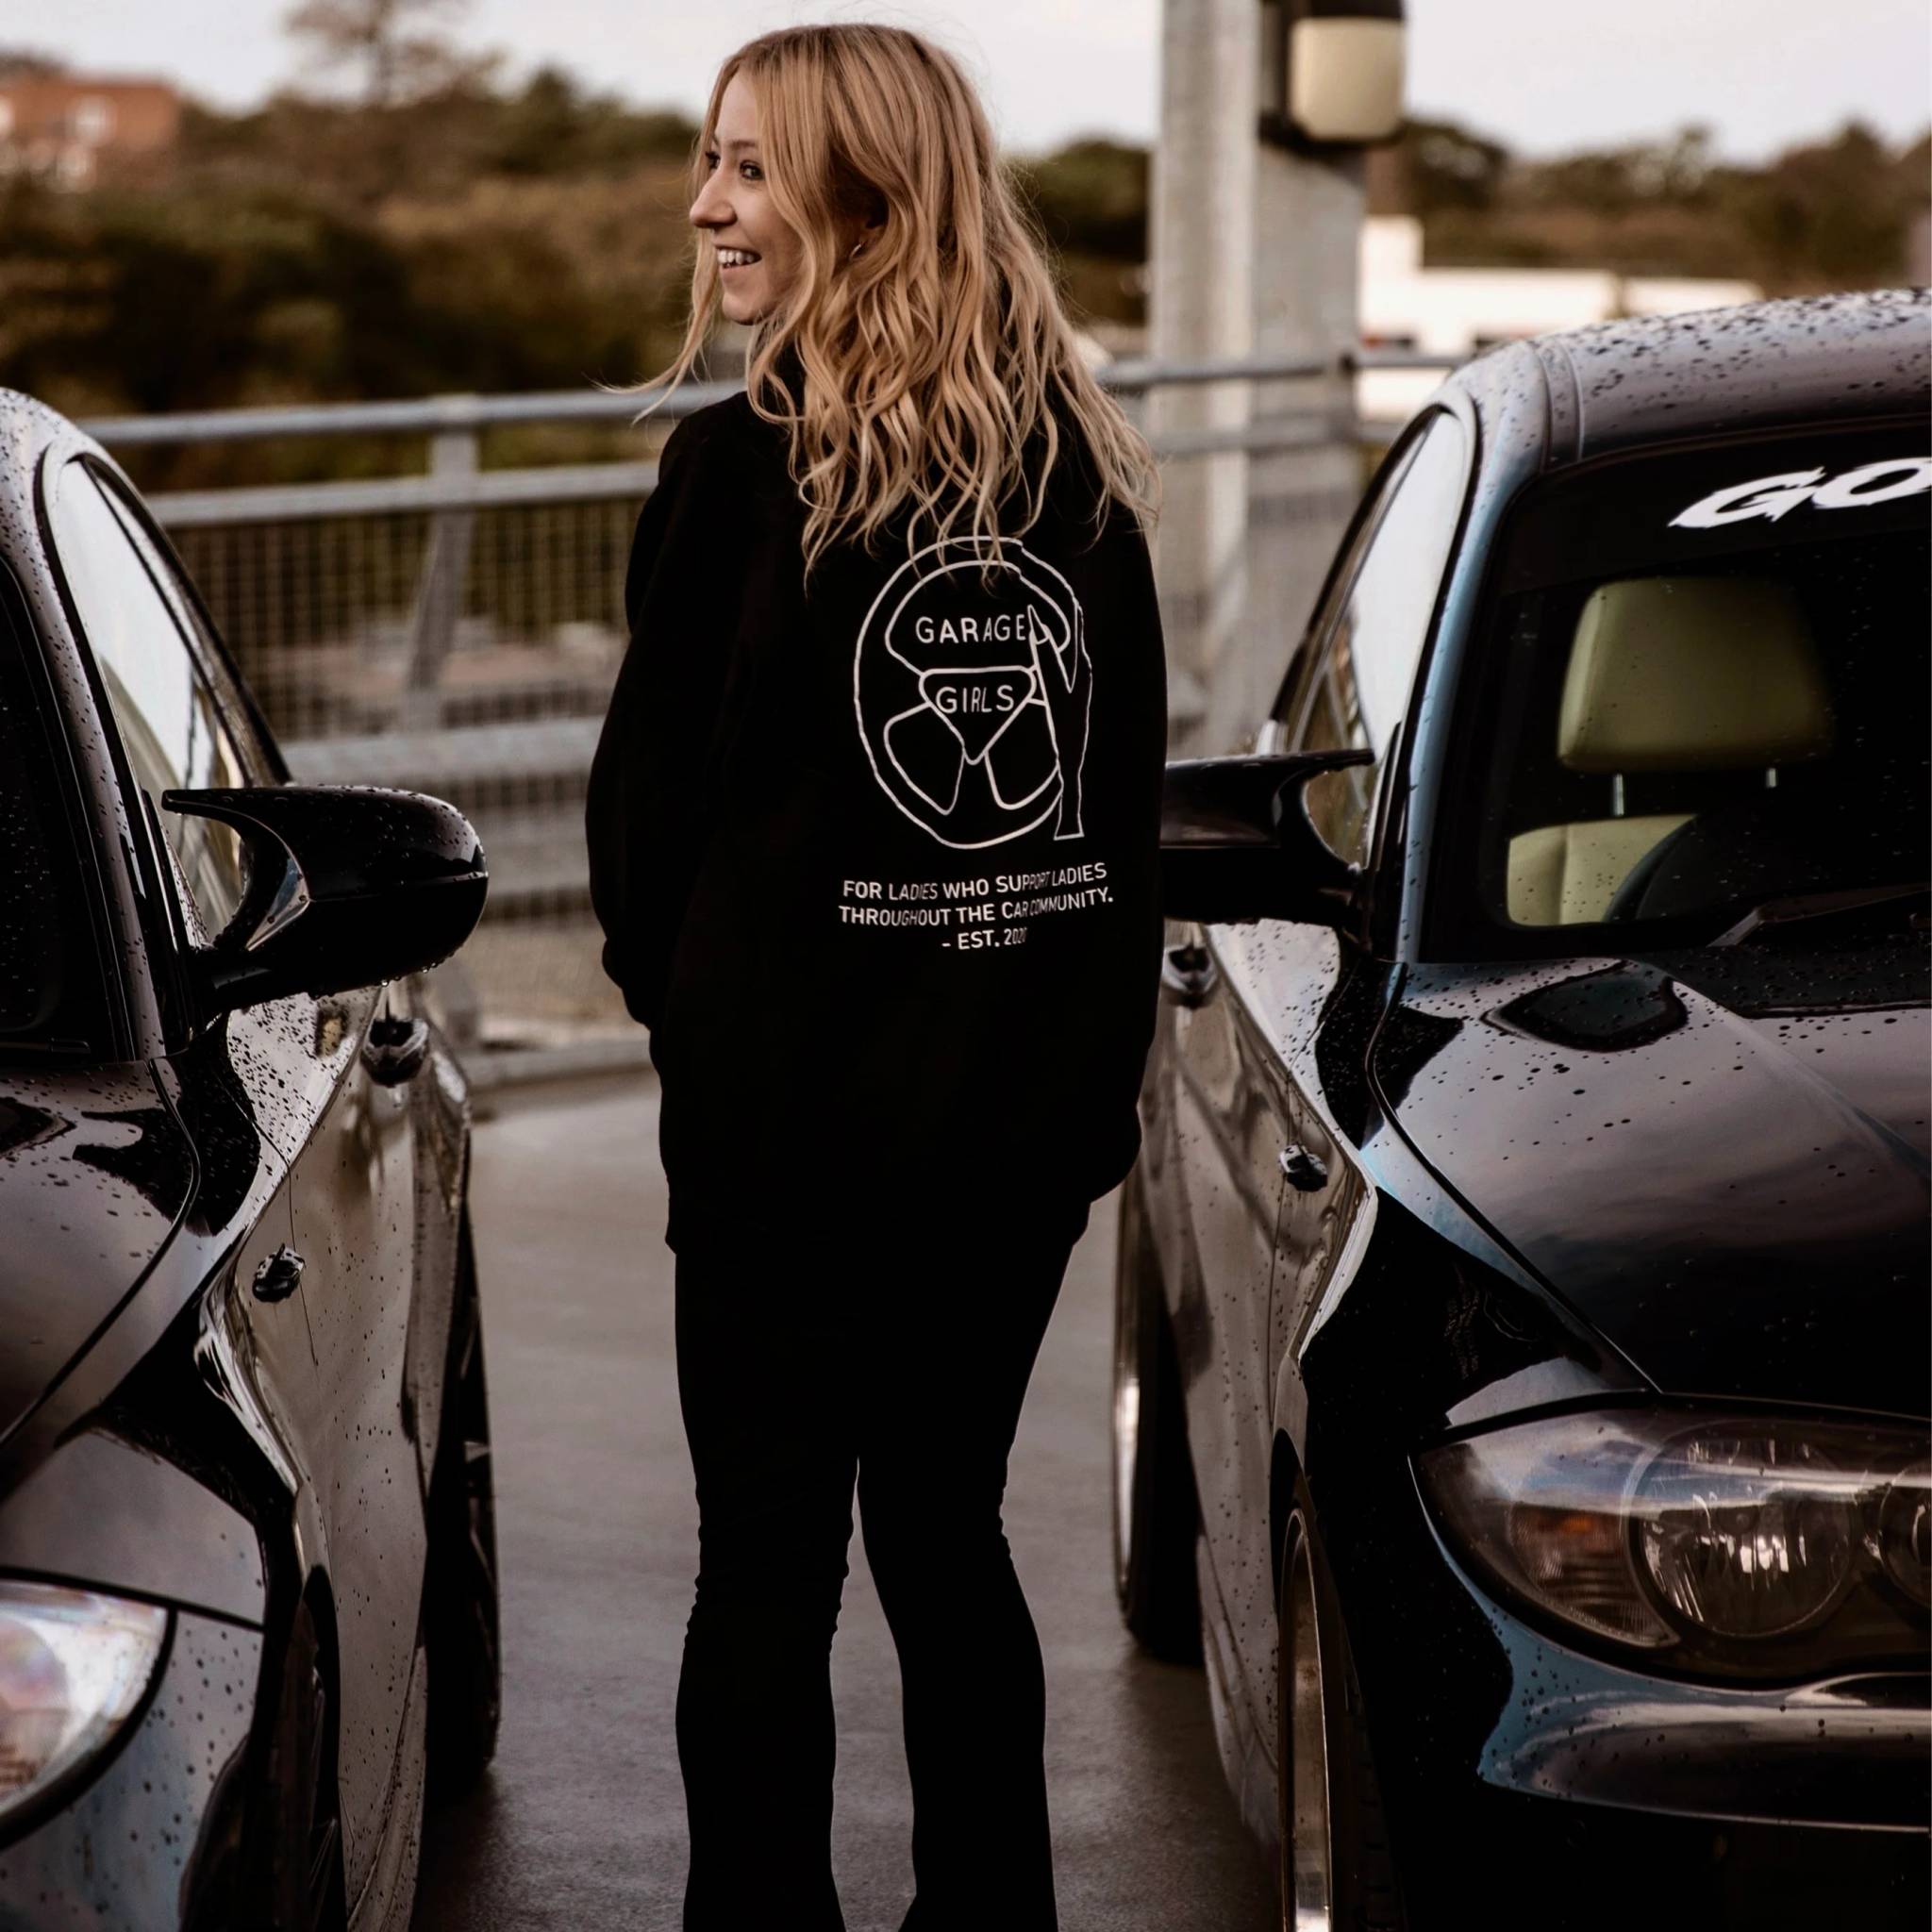 Garage Girls: a community for female petrolheads